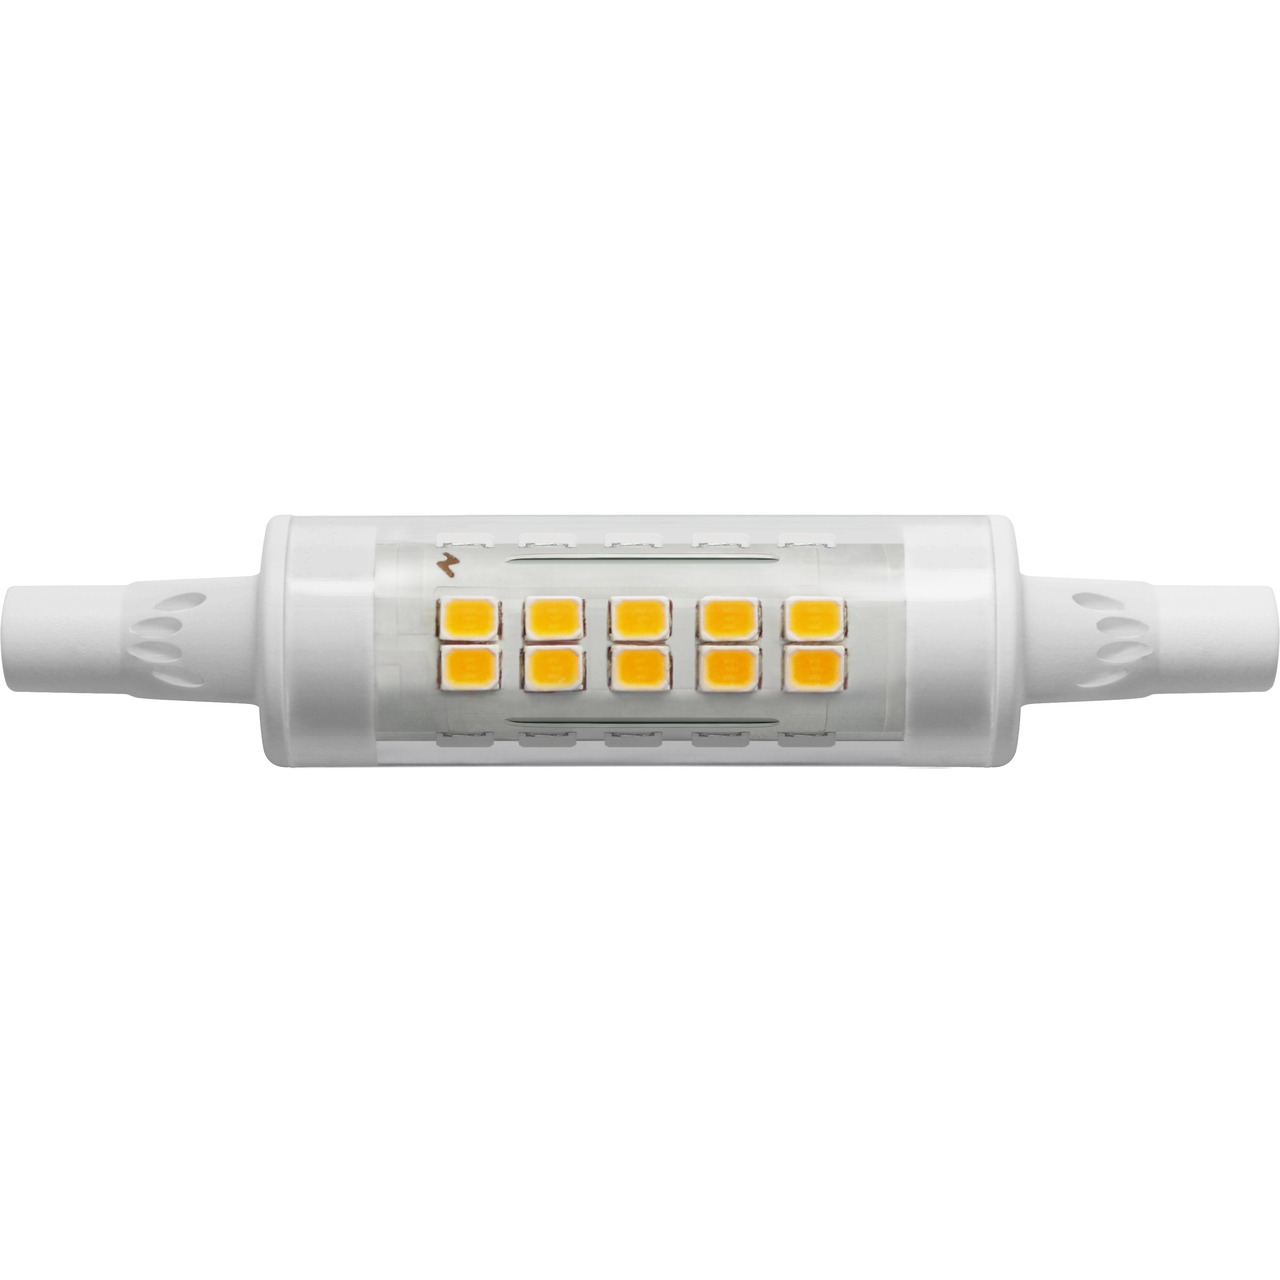 Blulaxa 4-9-W-LED-Lampe- R7s- 700 lm- warmweiss- 3000 K- 142 lm-W- schmale Bauform- - 16 mm unter Beleuchtung